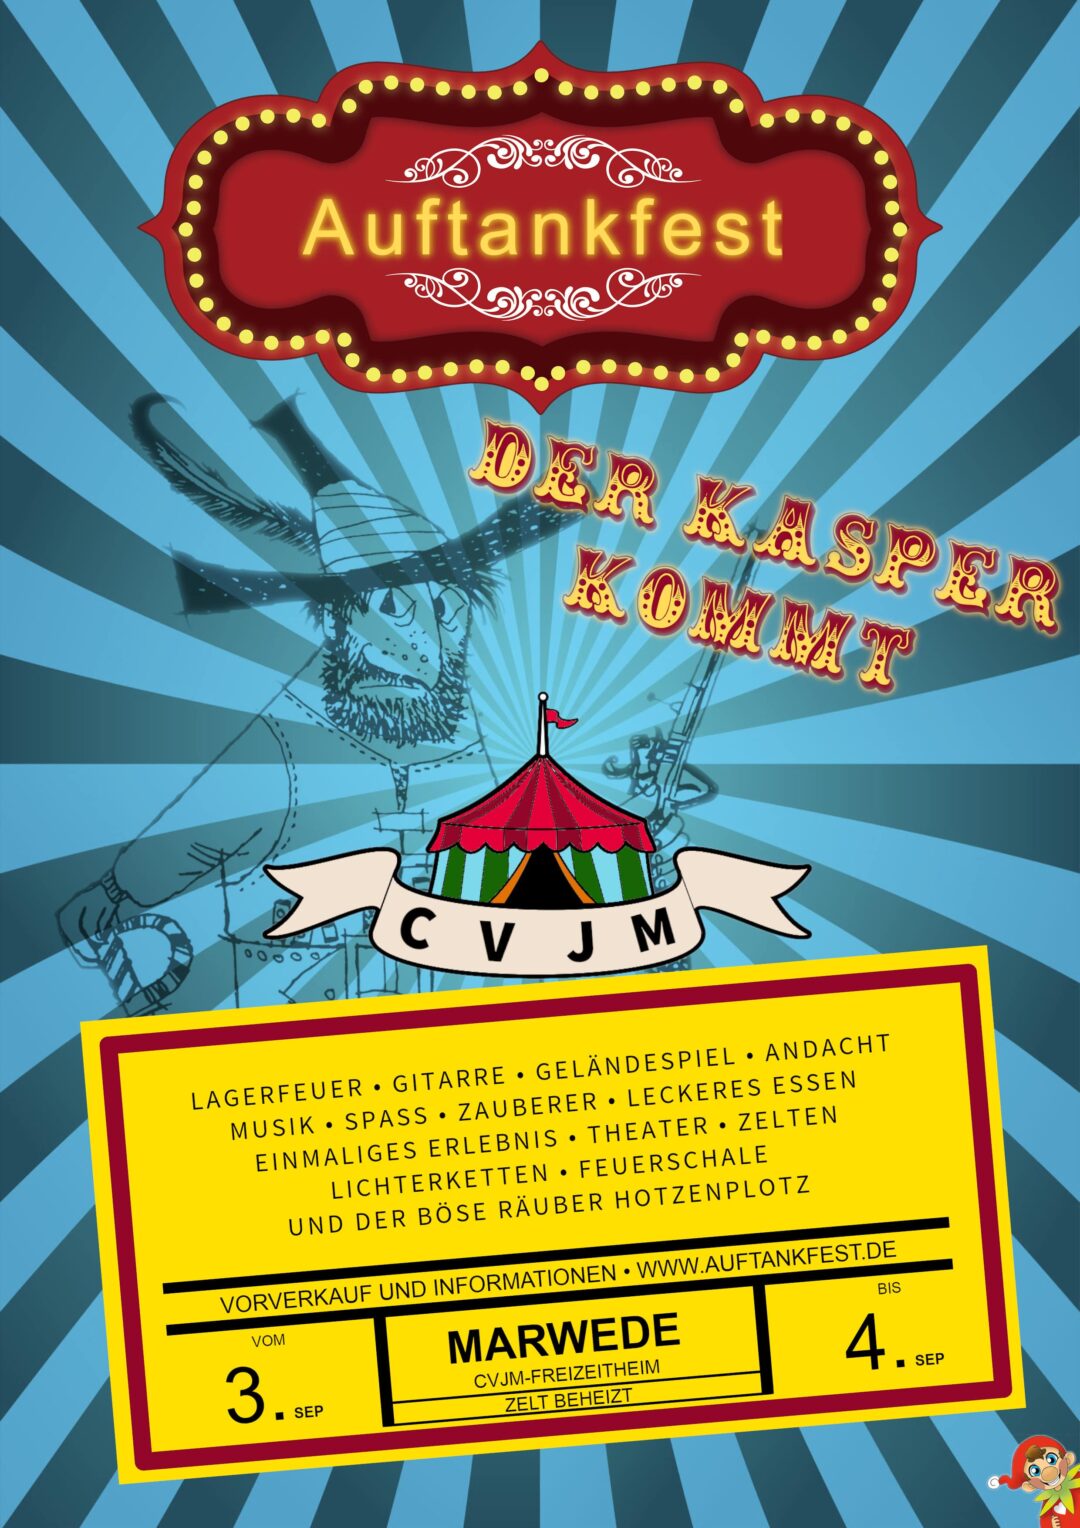 Auftankfest 2022 – Save the Date – 3. bis 4. September 2022